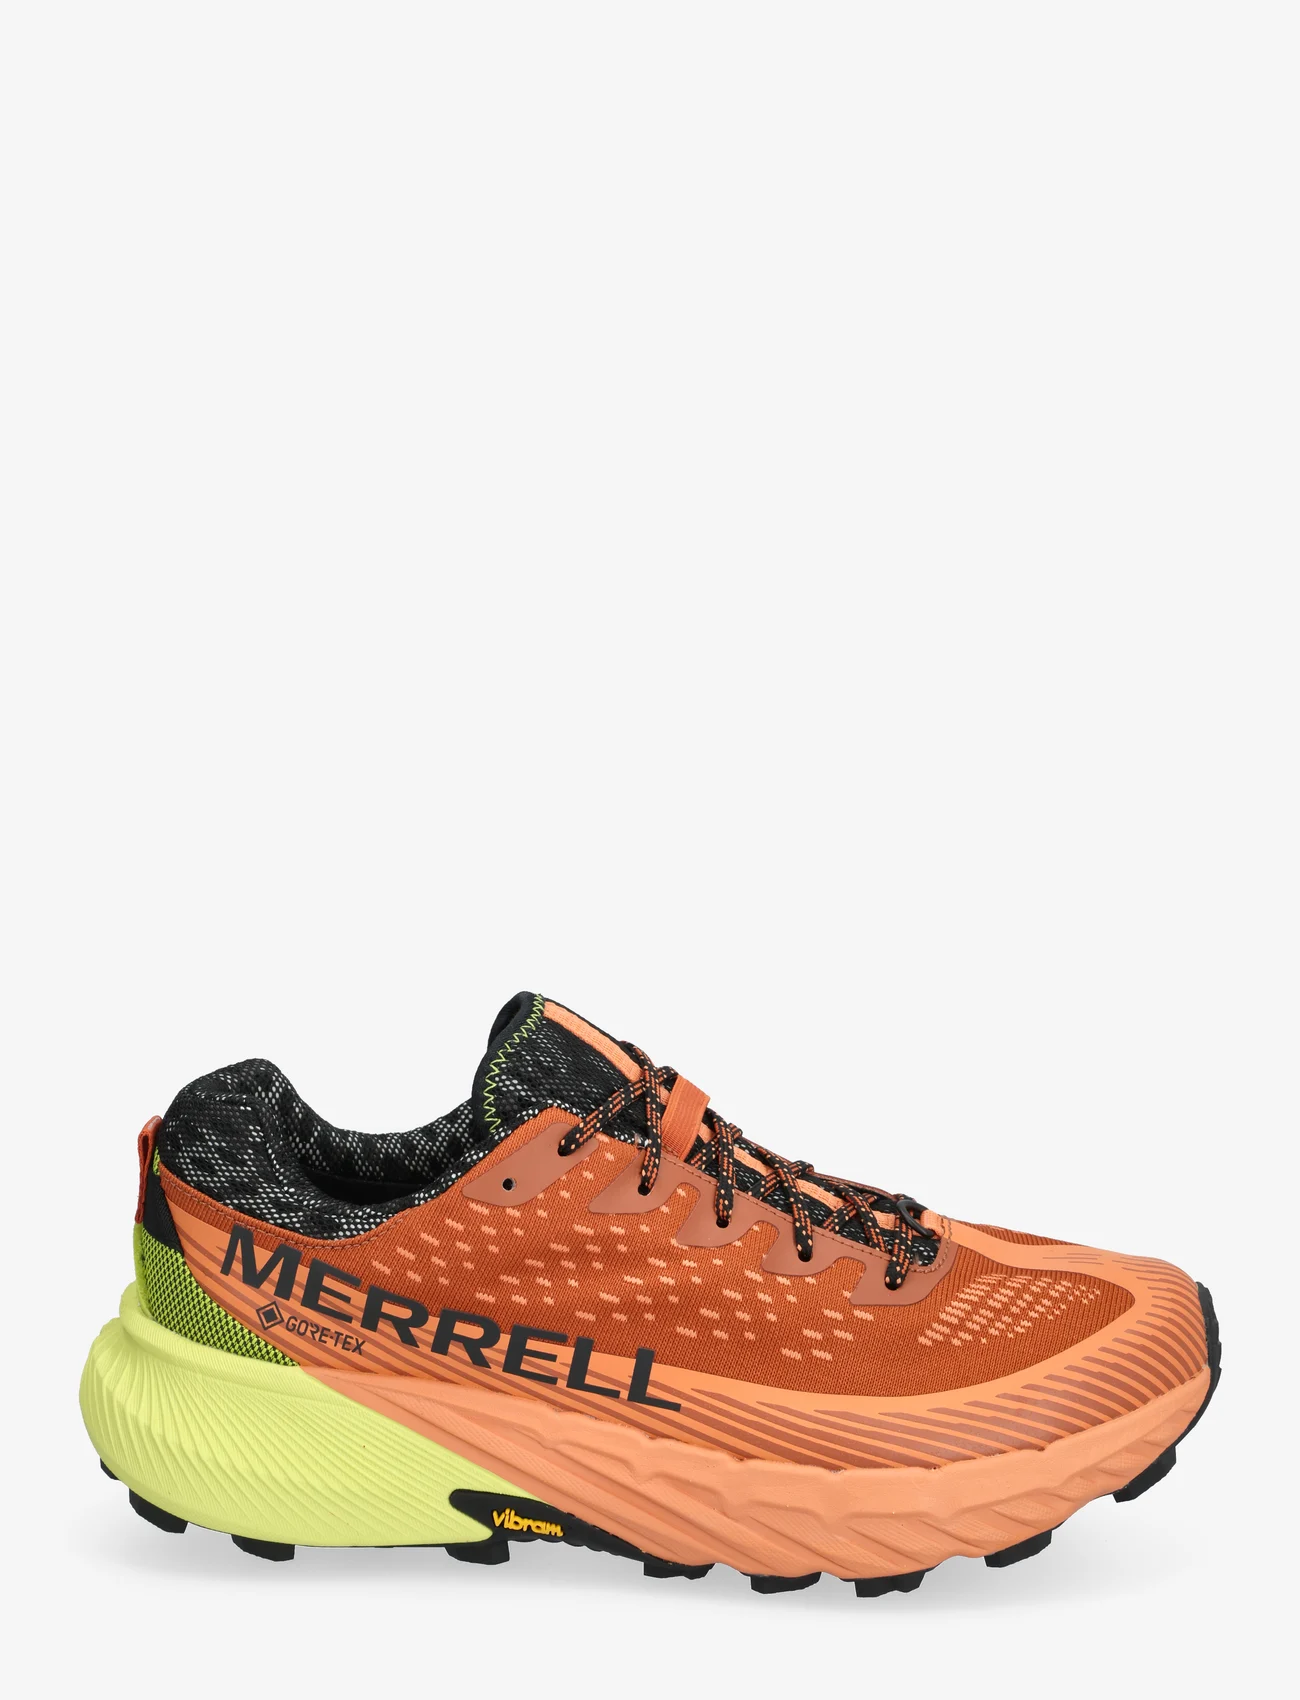 Merrell - Men's Agility Peak 5 GTX - Clay/Mel - löparskor - clay/melon - 1